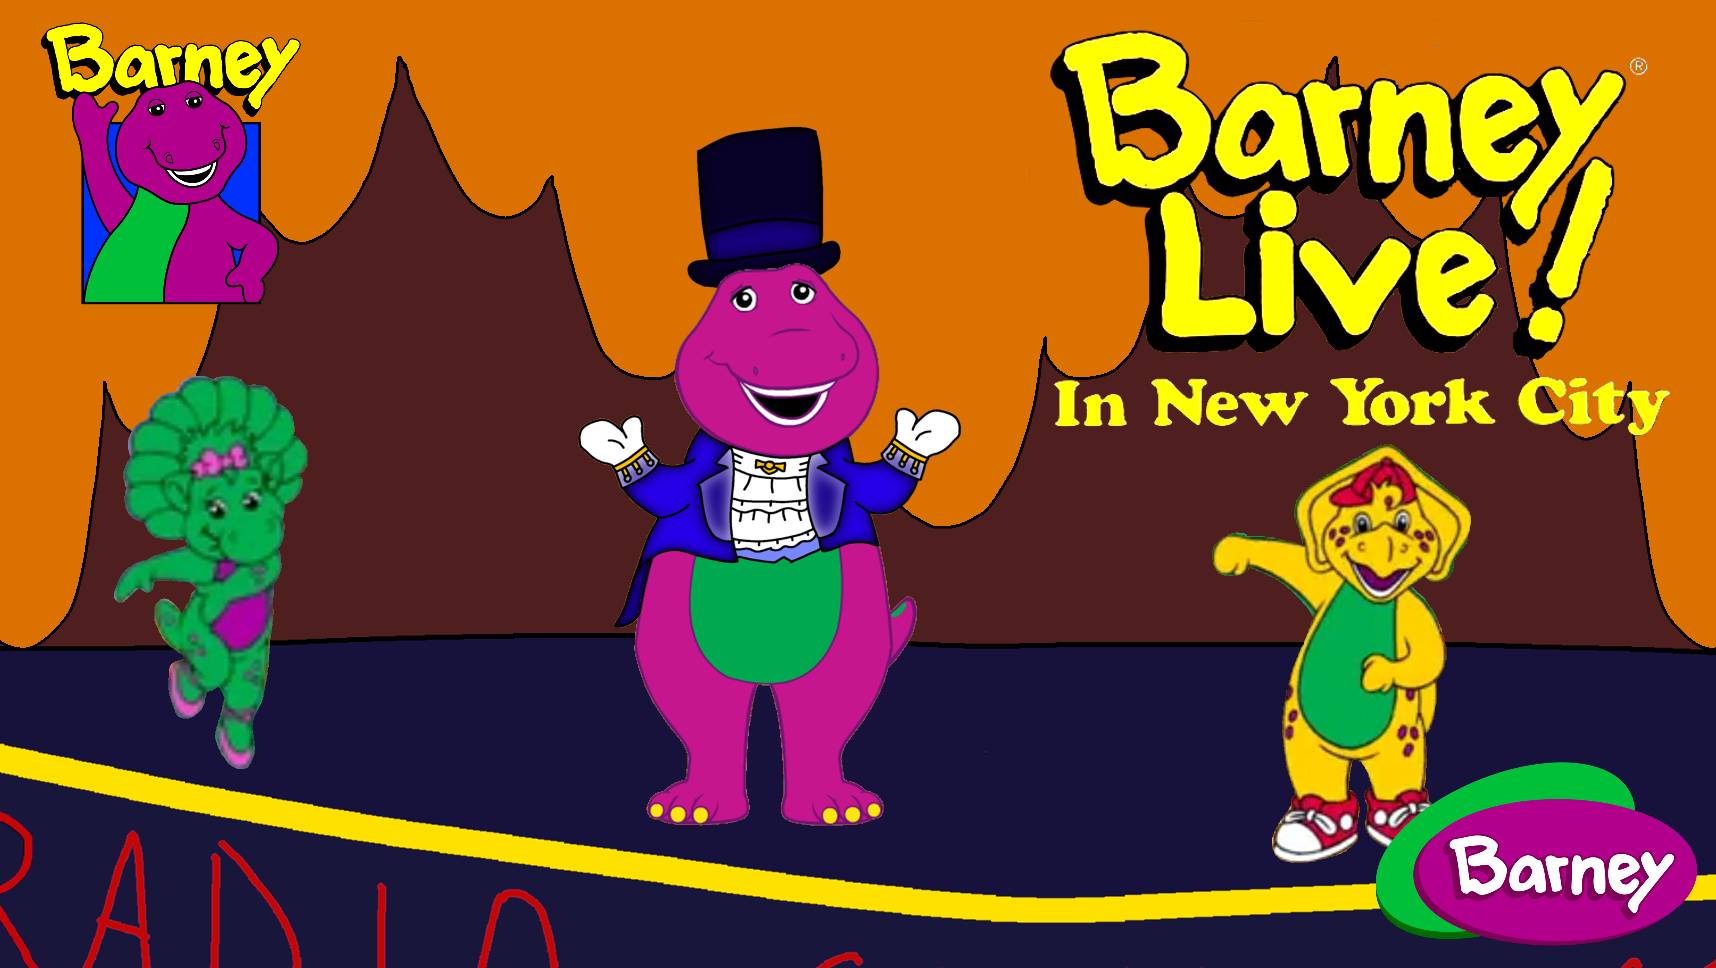 Barney Live in New York City - Poster by KingofAmericanArgent on DeviantArt